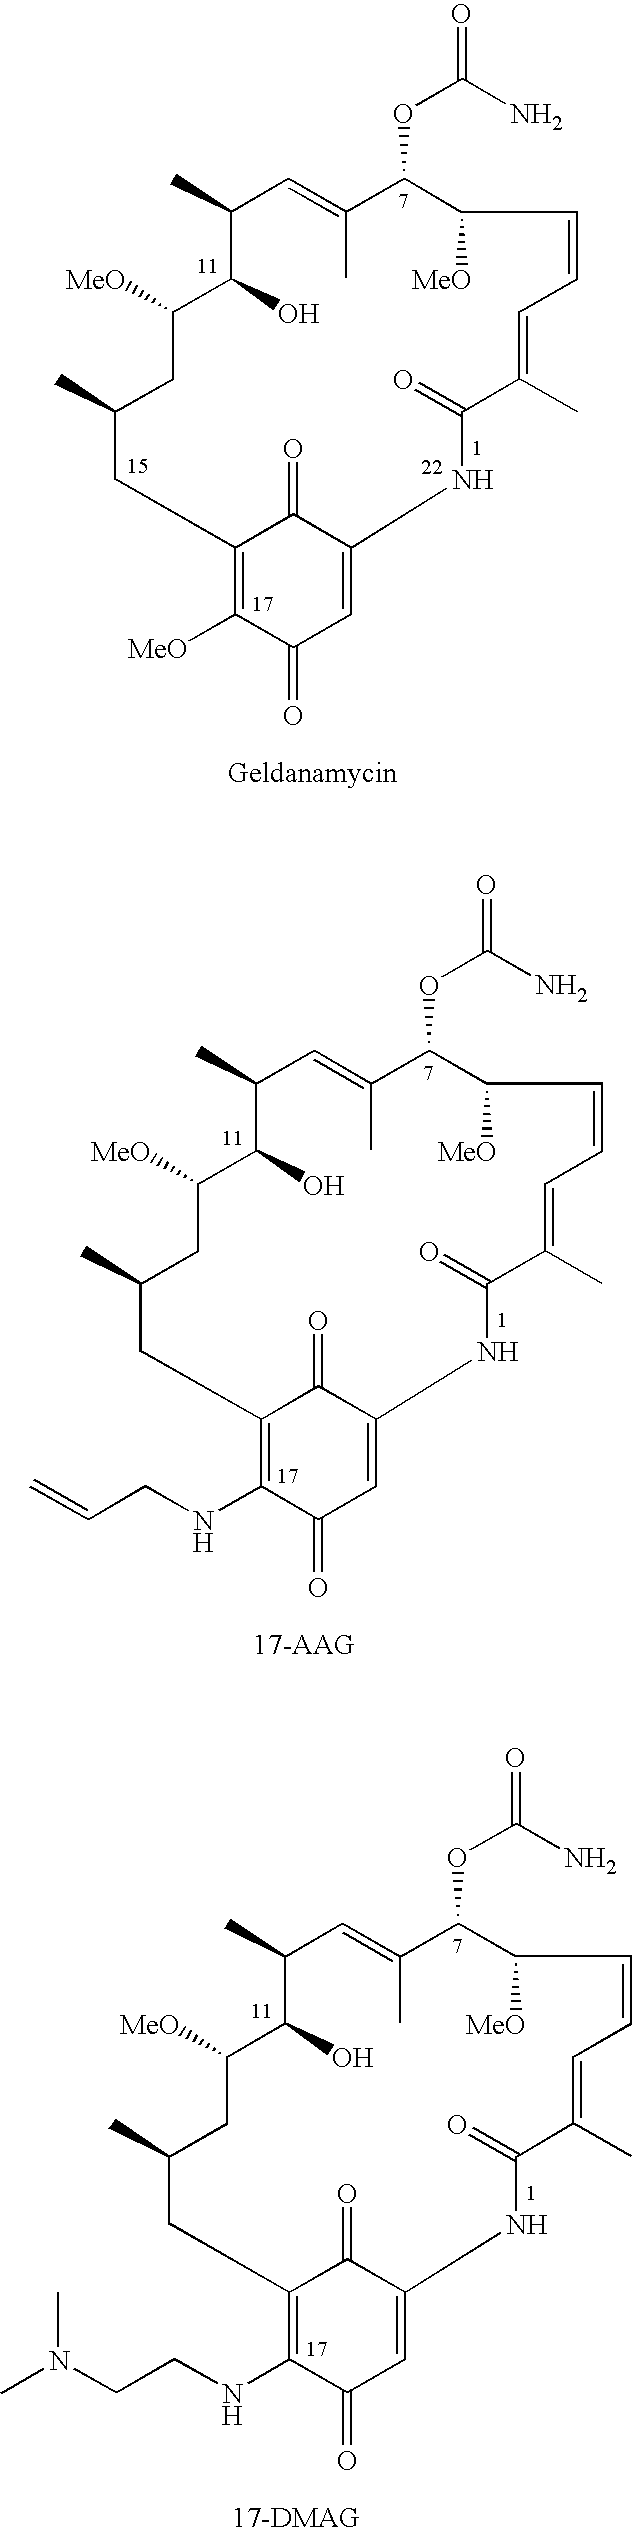 Pharmaceutical compositions comprising 17-allylamino-17-demethoxygeldanamycin